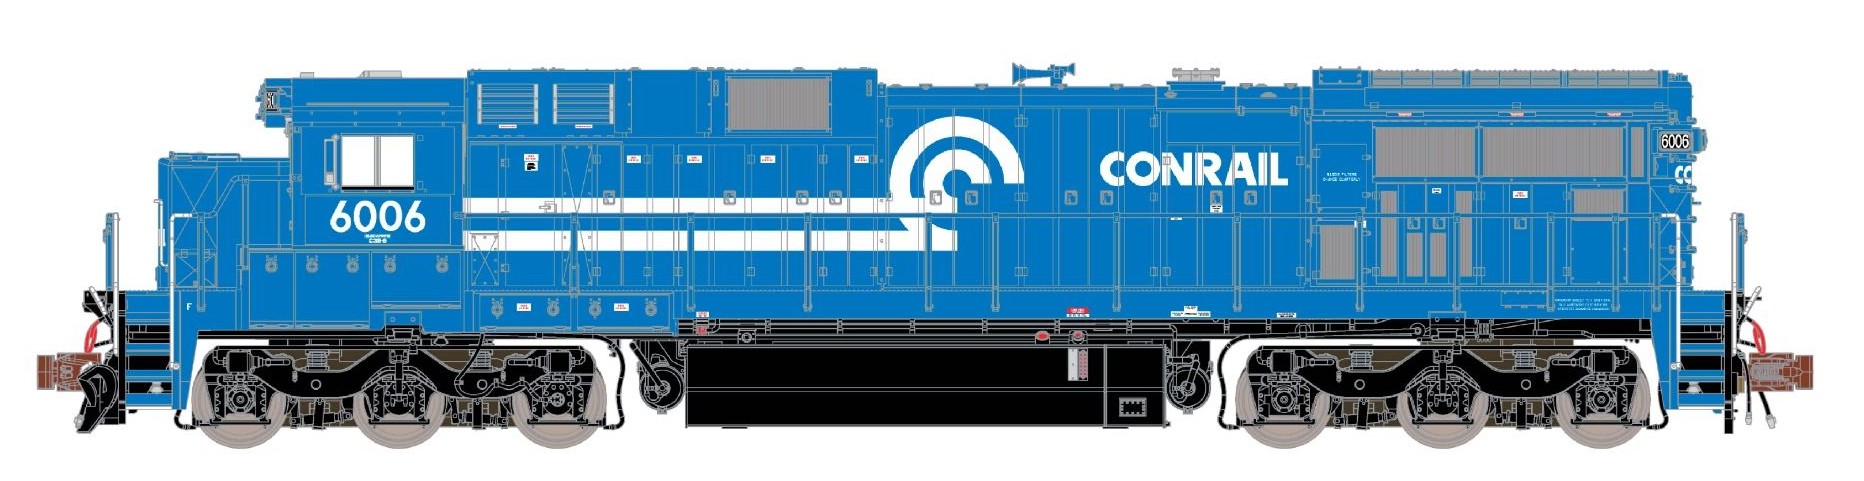 ScaleTrains Rivet Counter N SXT39179 DCC/ESU Loksound 5 Equipped GE C39-8 Locomotive Phase III Conrail '1990s Era' CR #6021